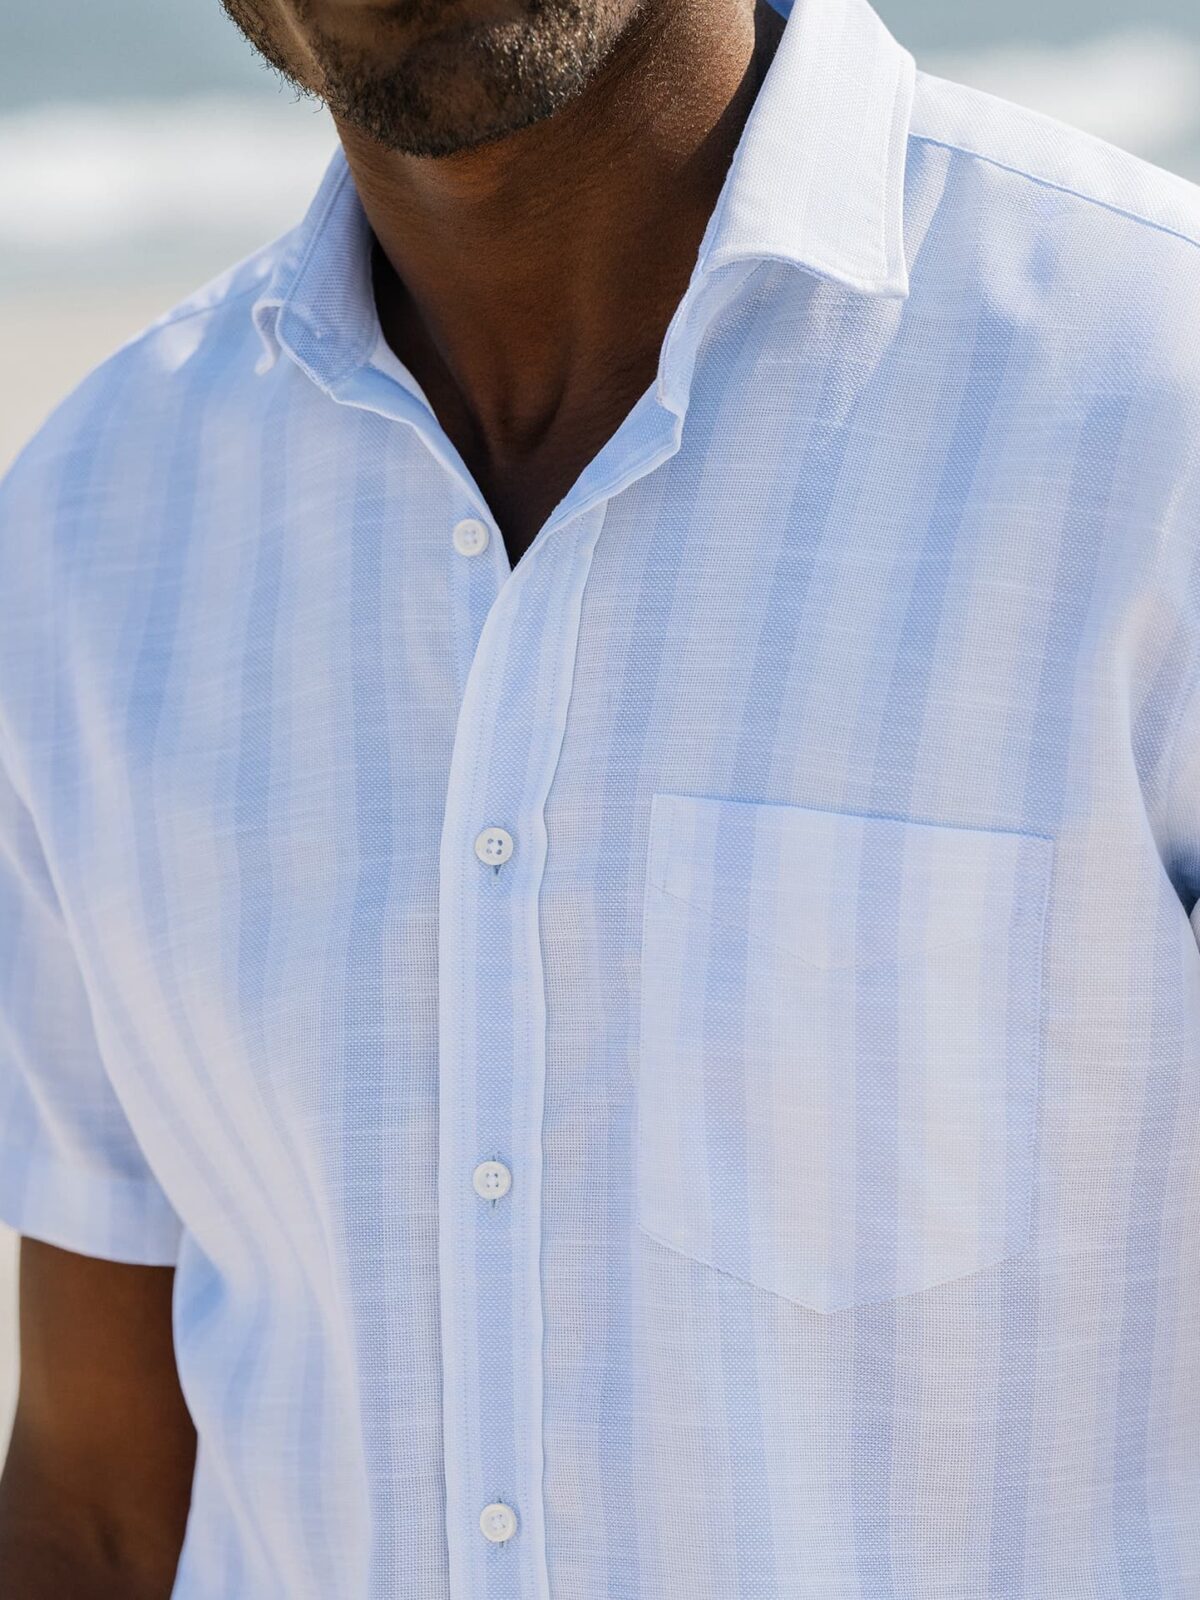 Dry Pique Striped Short-Sleeve Polo Shirt